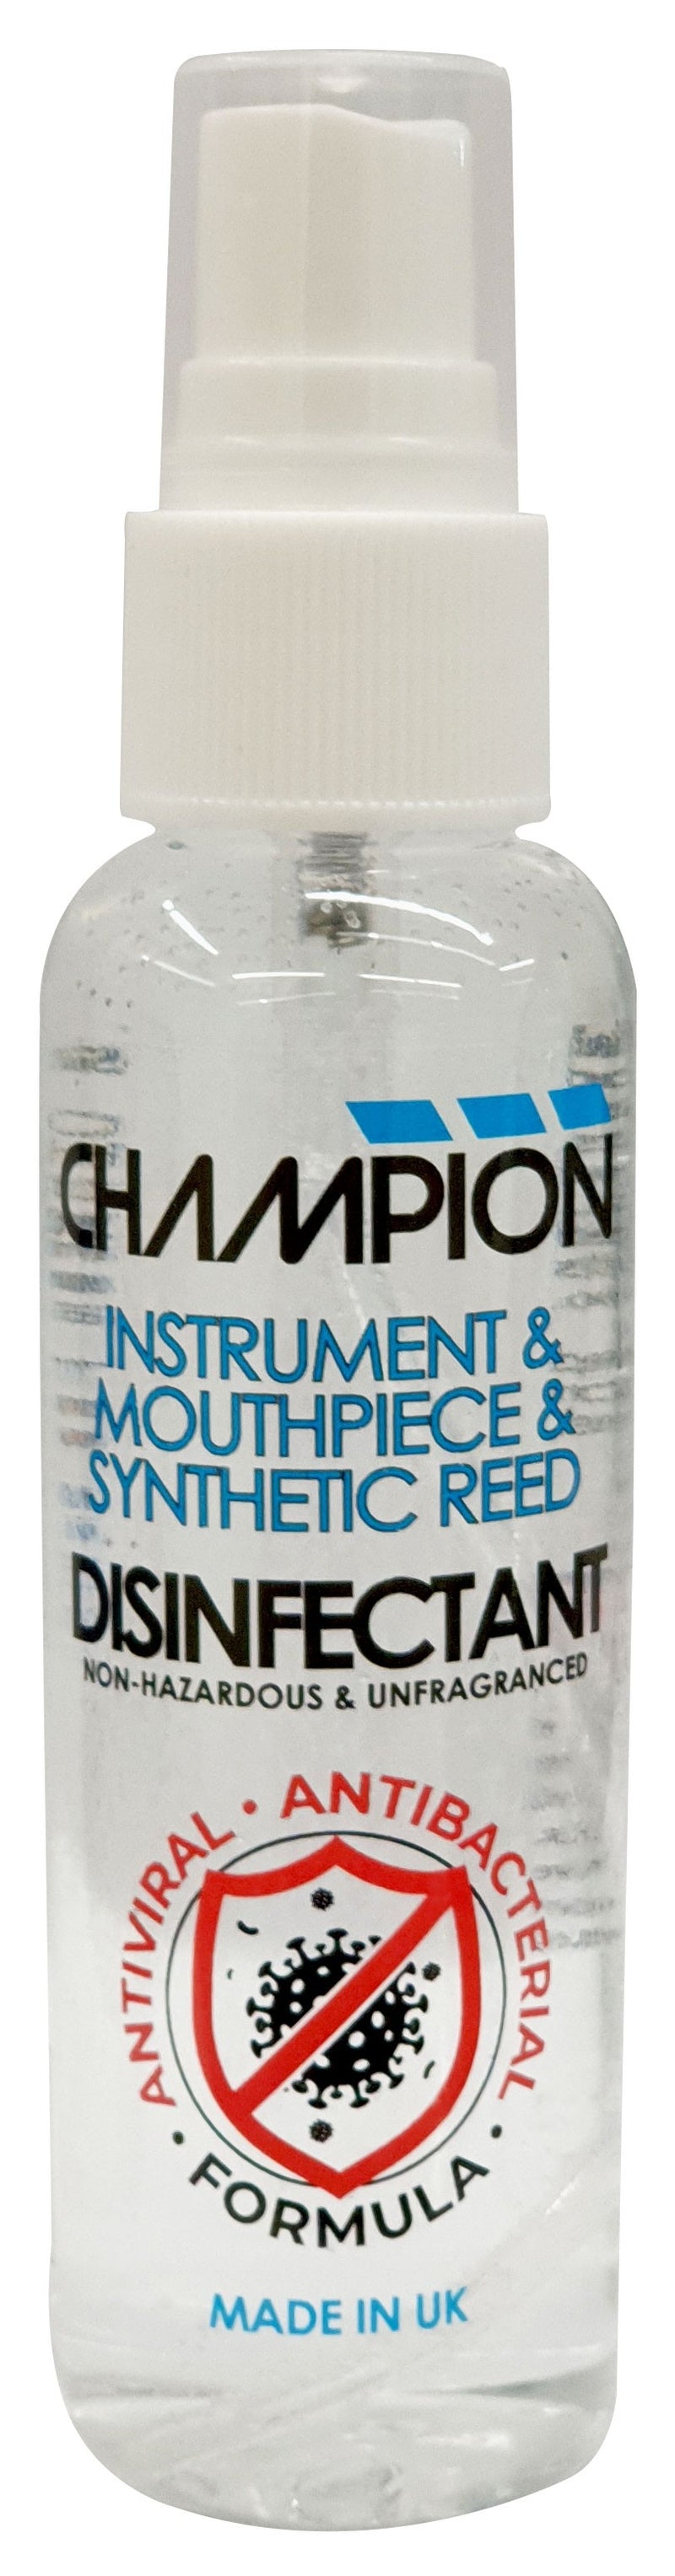 Champion Disinfectant Spray - 60ML Bottle